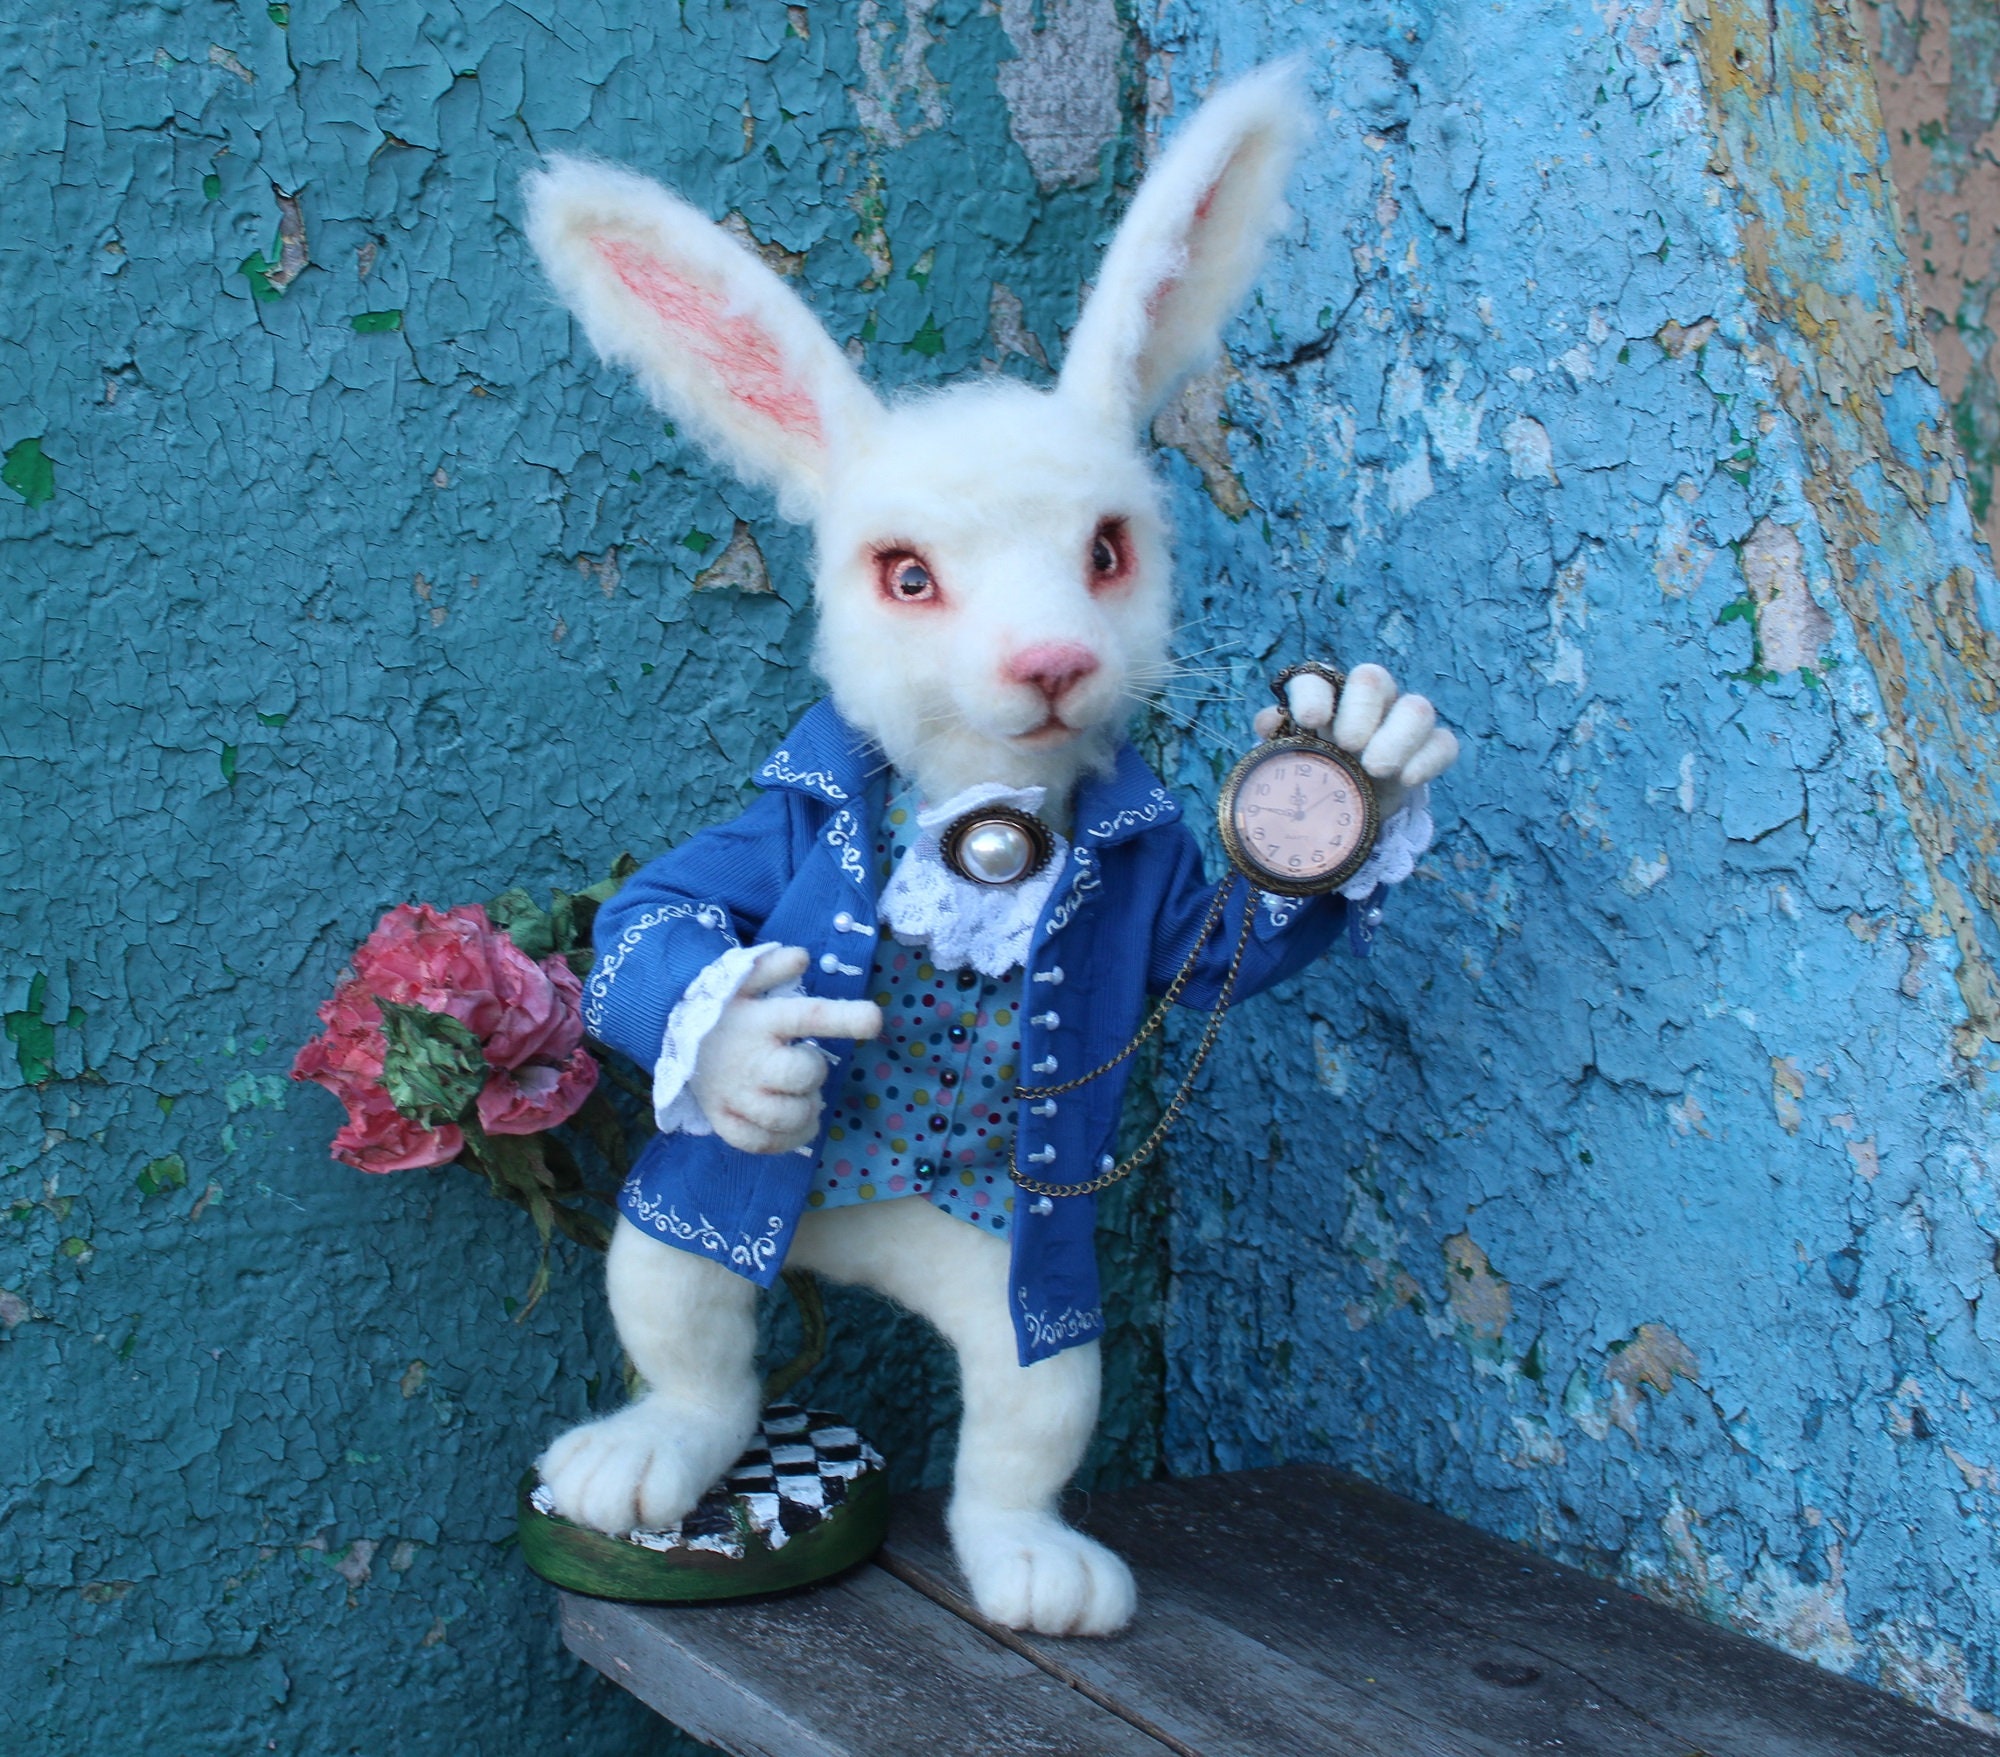 Alice in Wonderland White Rabbit NWT 7.5 Squishmallow